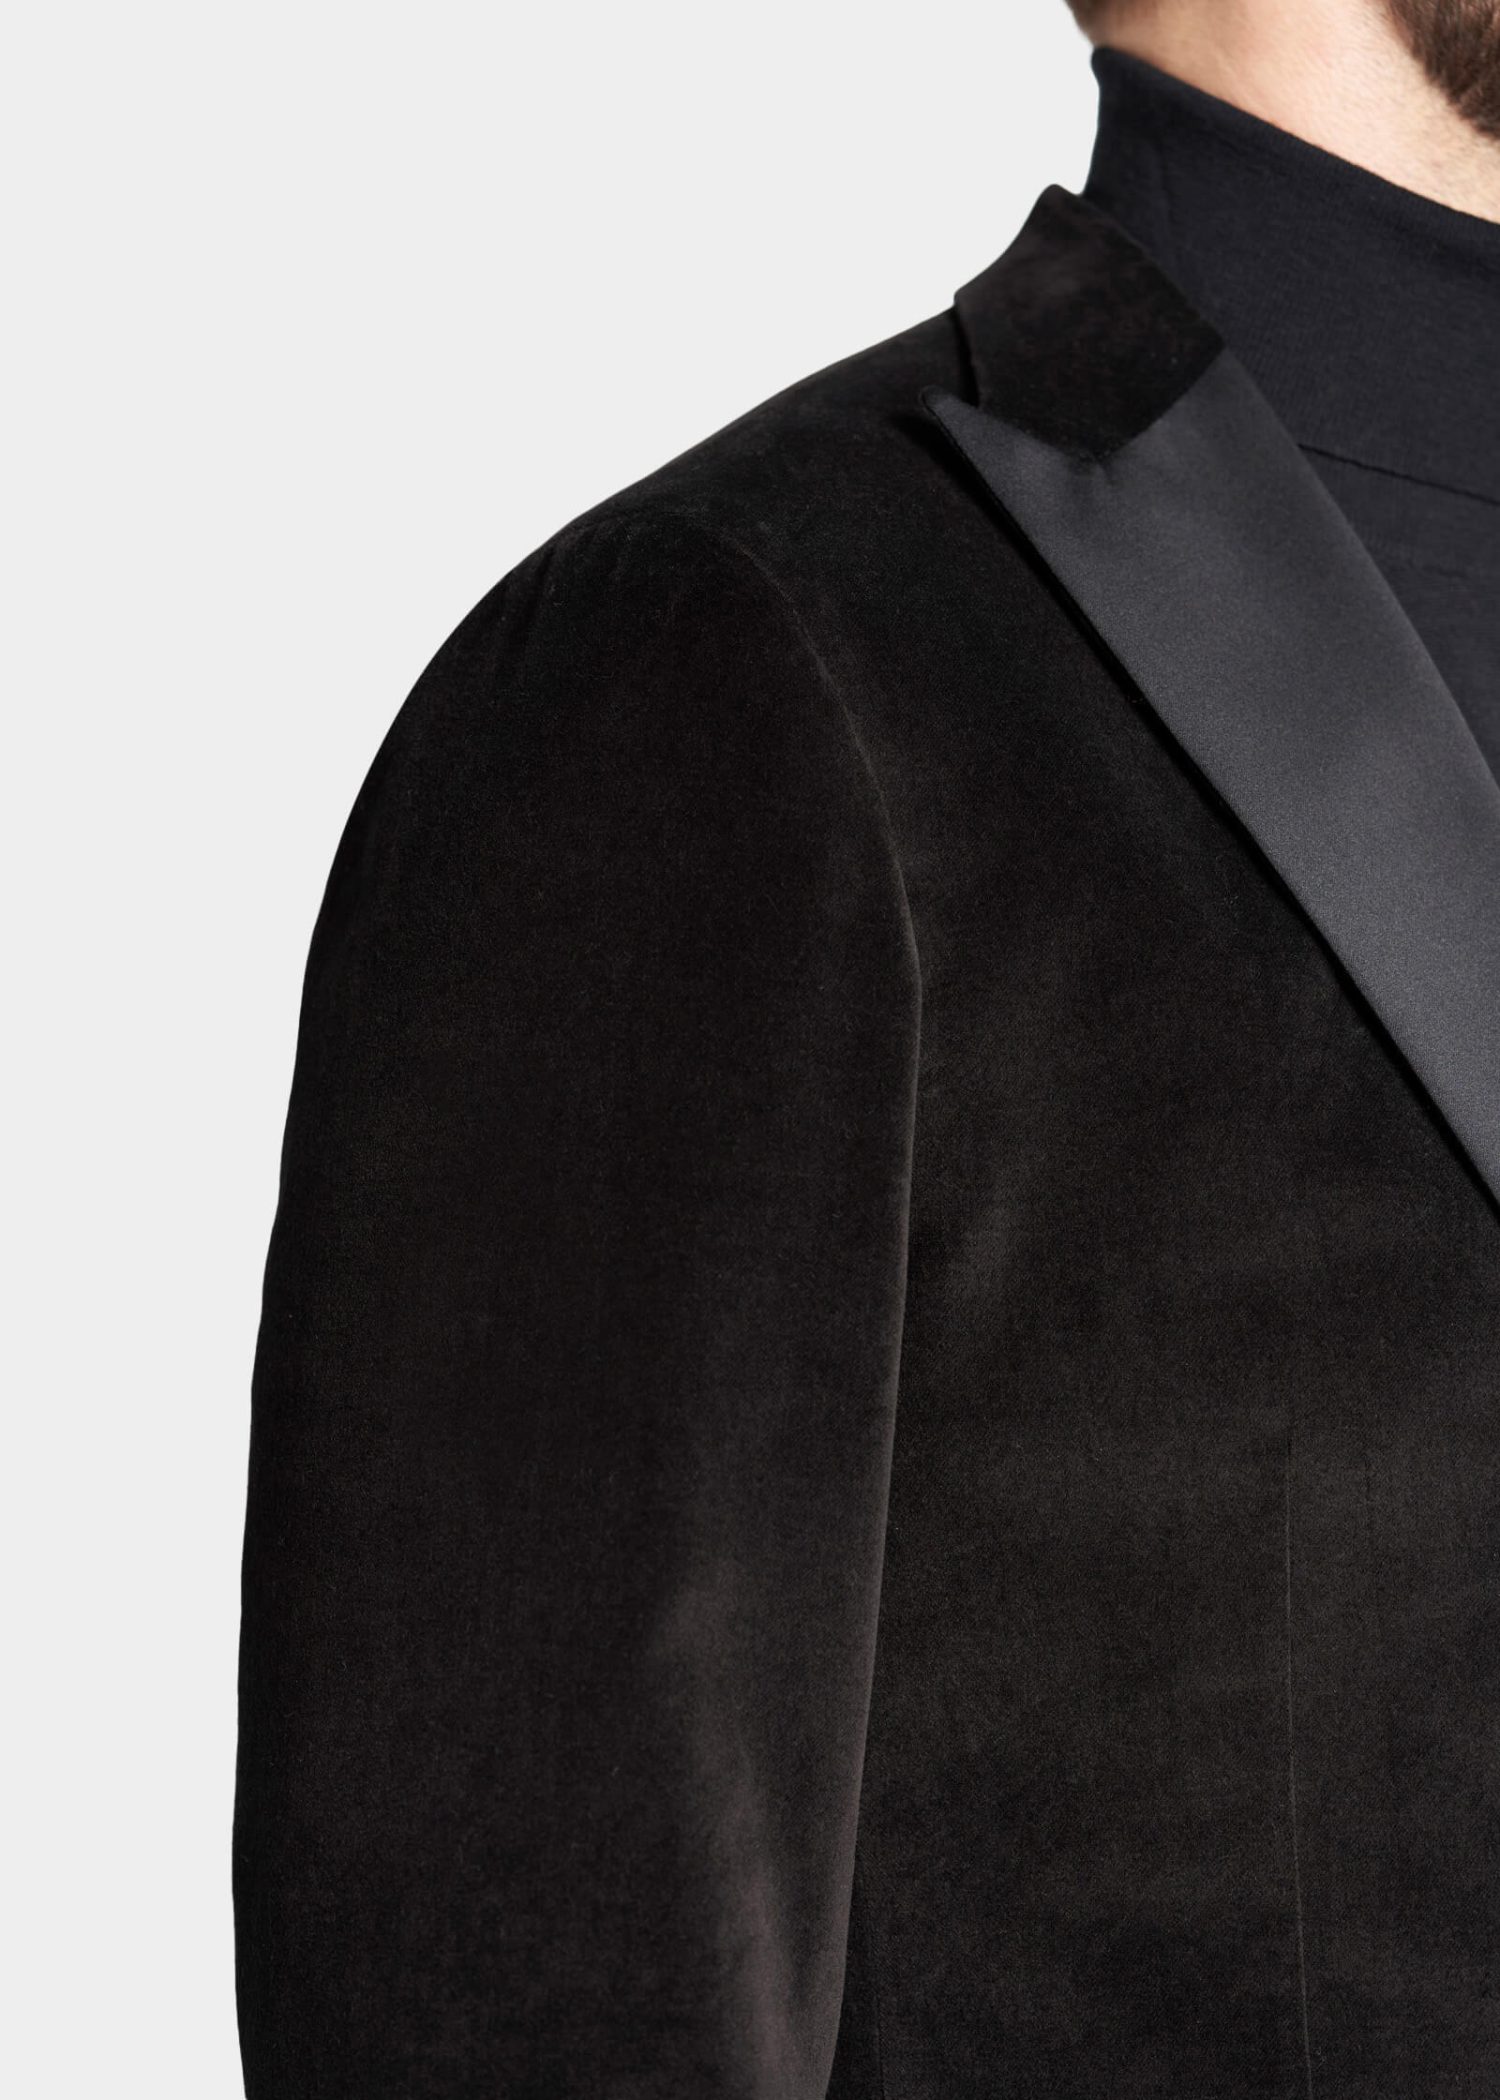 Black-Velvet-Mond-Custom-Jacket-Details-Shoulder